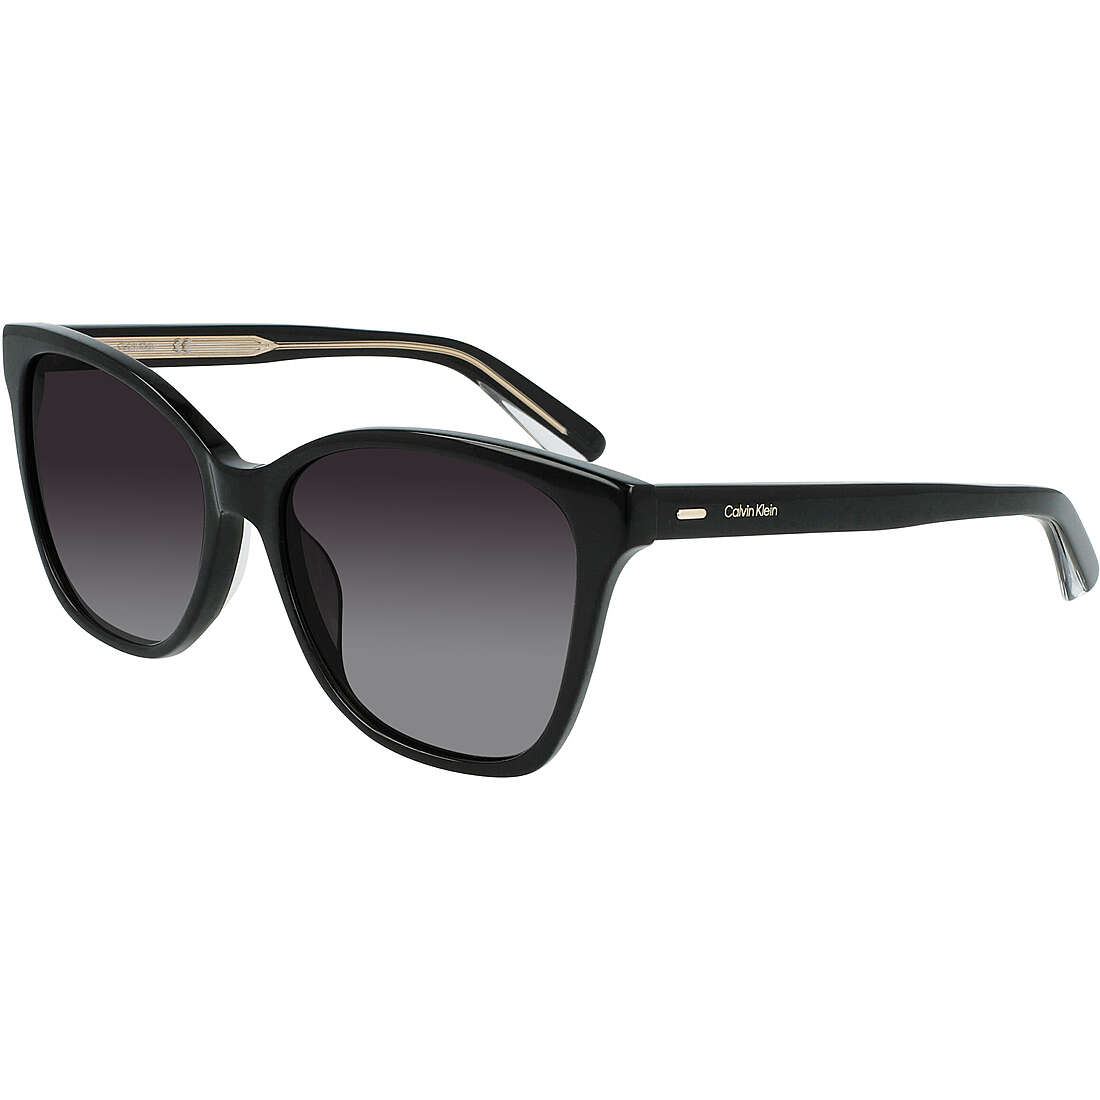 sunglasses woman Calvin Klein 593895516001